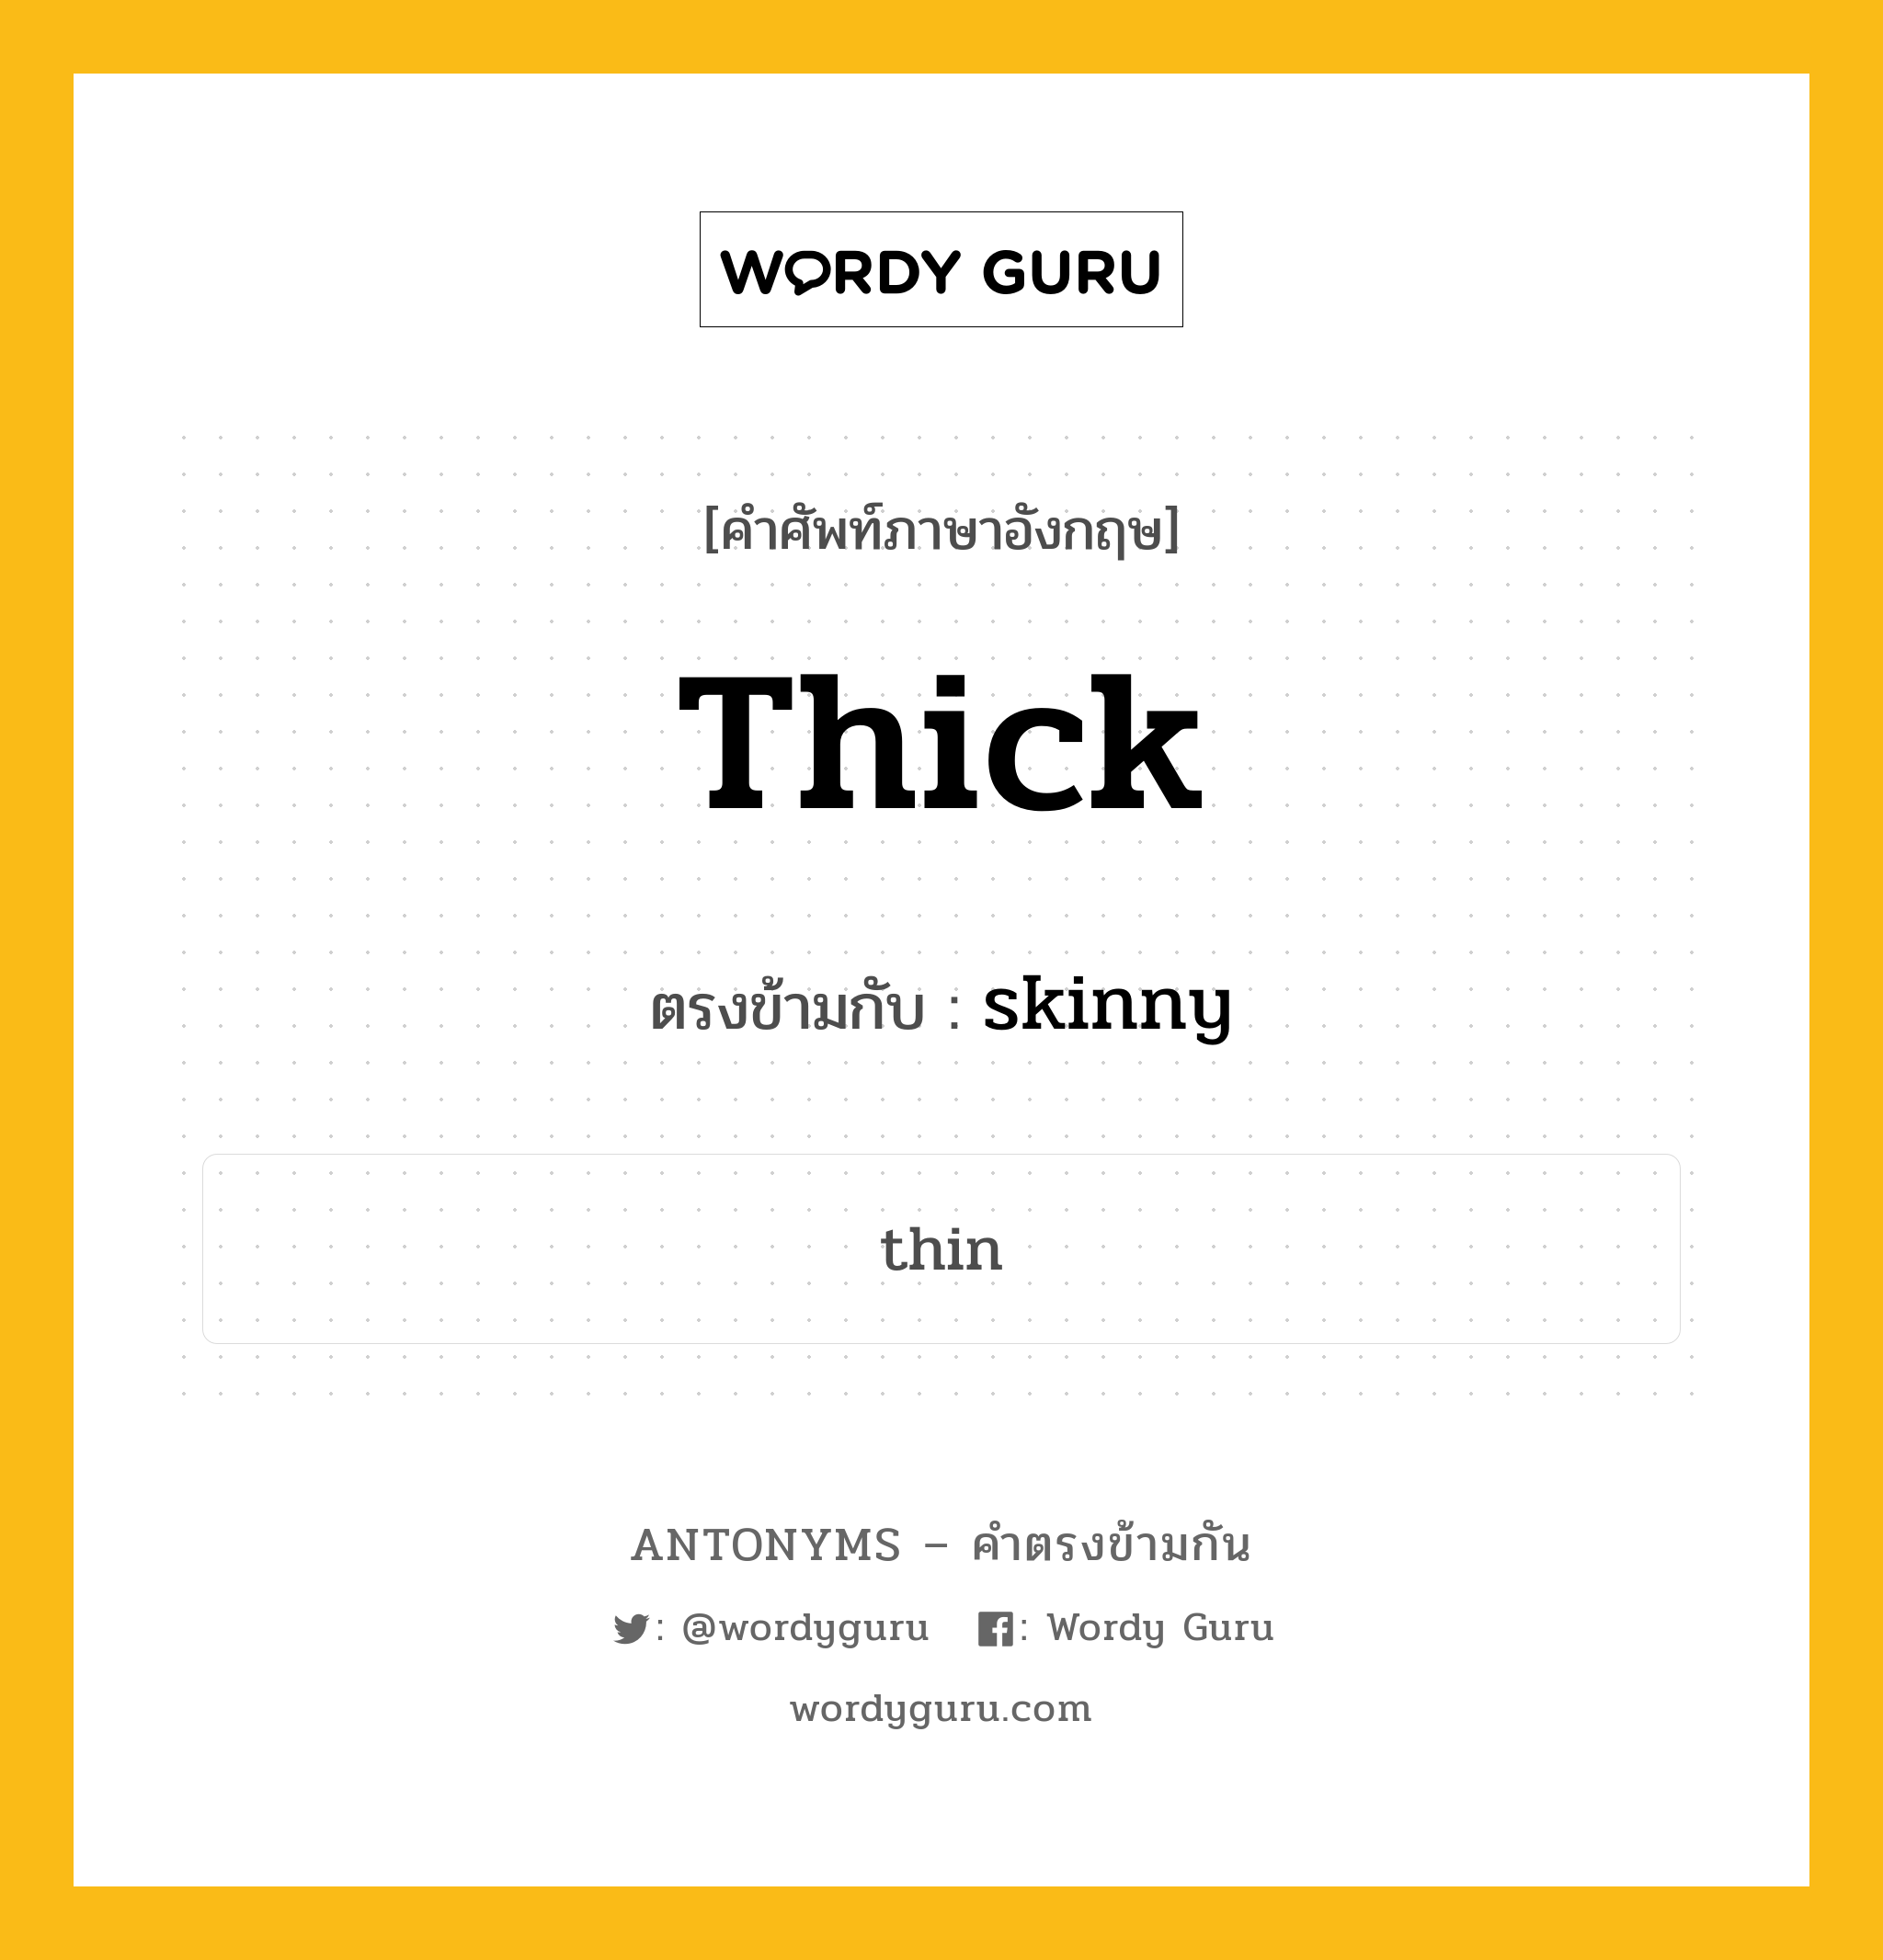 thick เป็นคำตรงข้ามกับคำไหนบ้าง?, คำศัพท์ภาษาอังกฤษ thick ตรงข้ามกับ skinny หมวด skinny